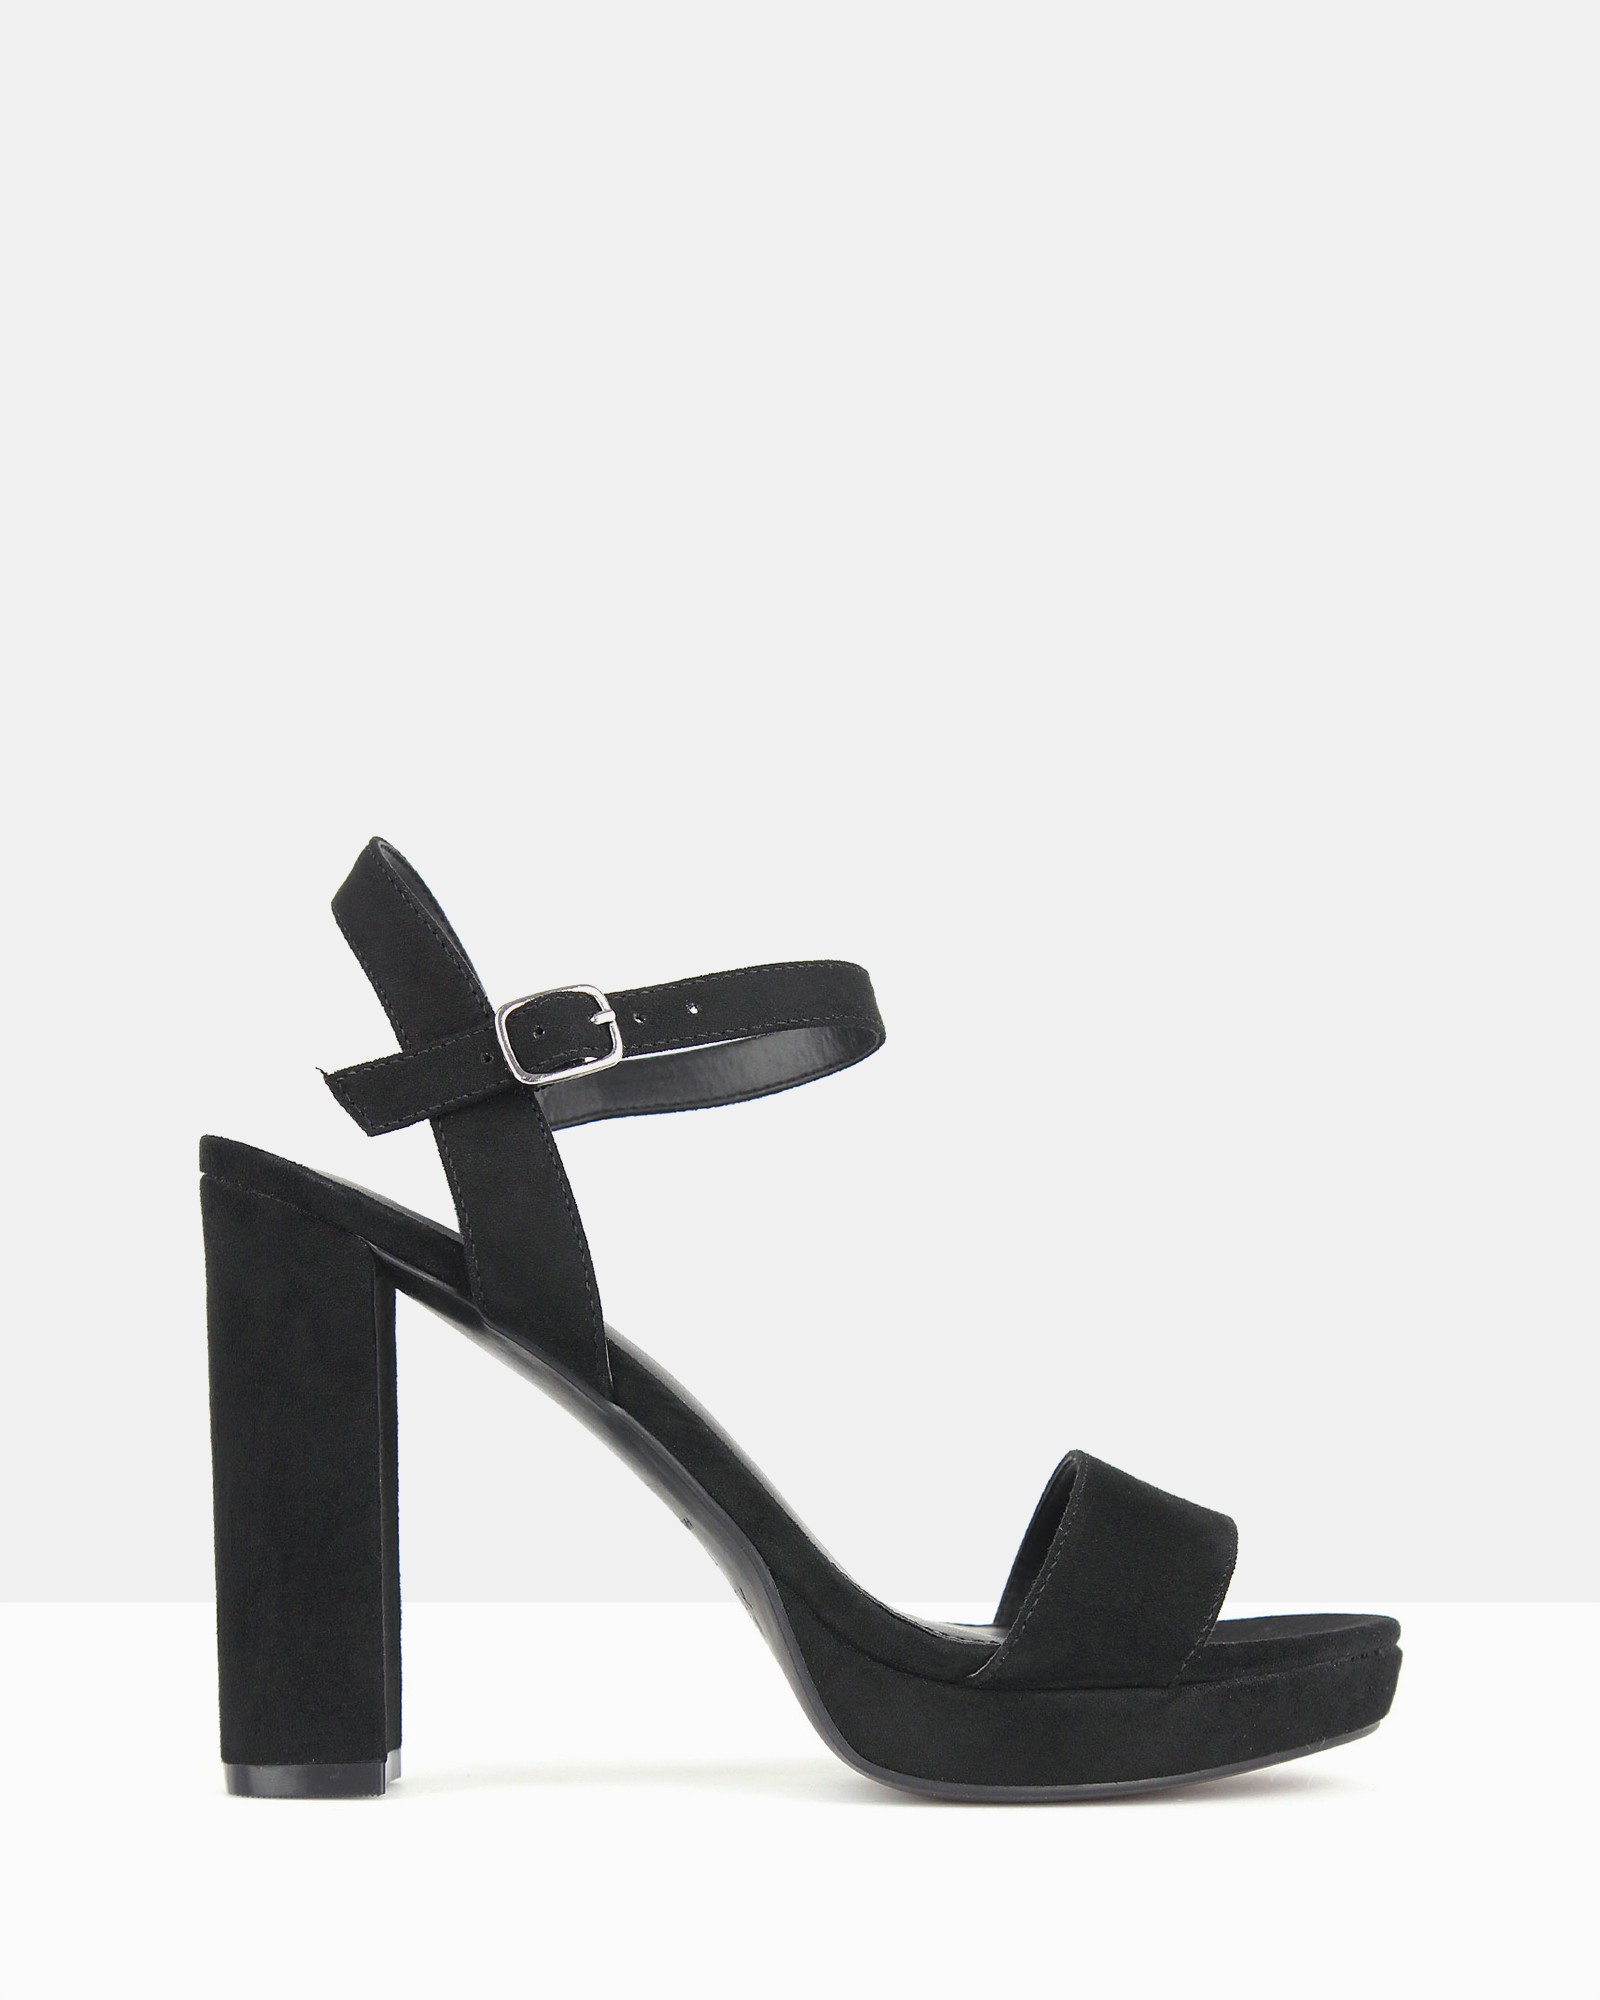 black heel platform sandals